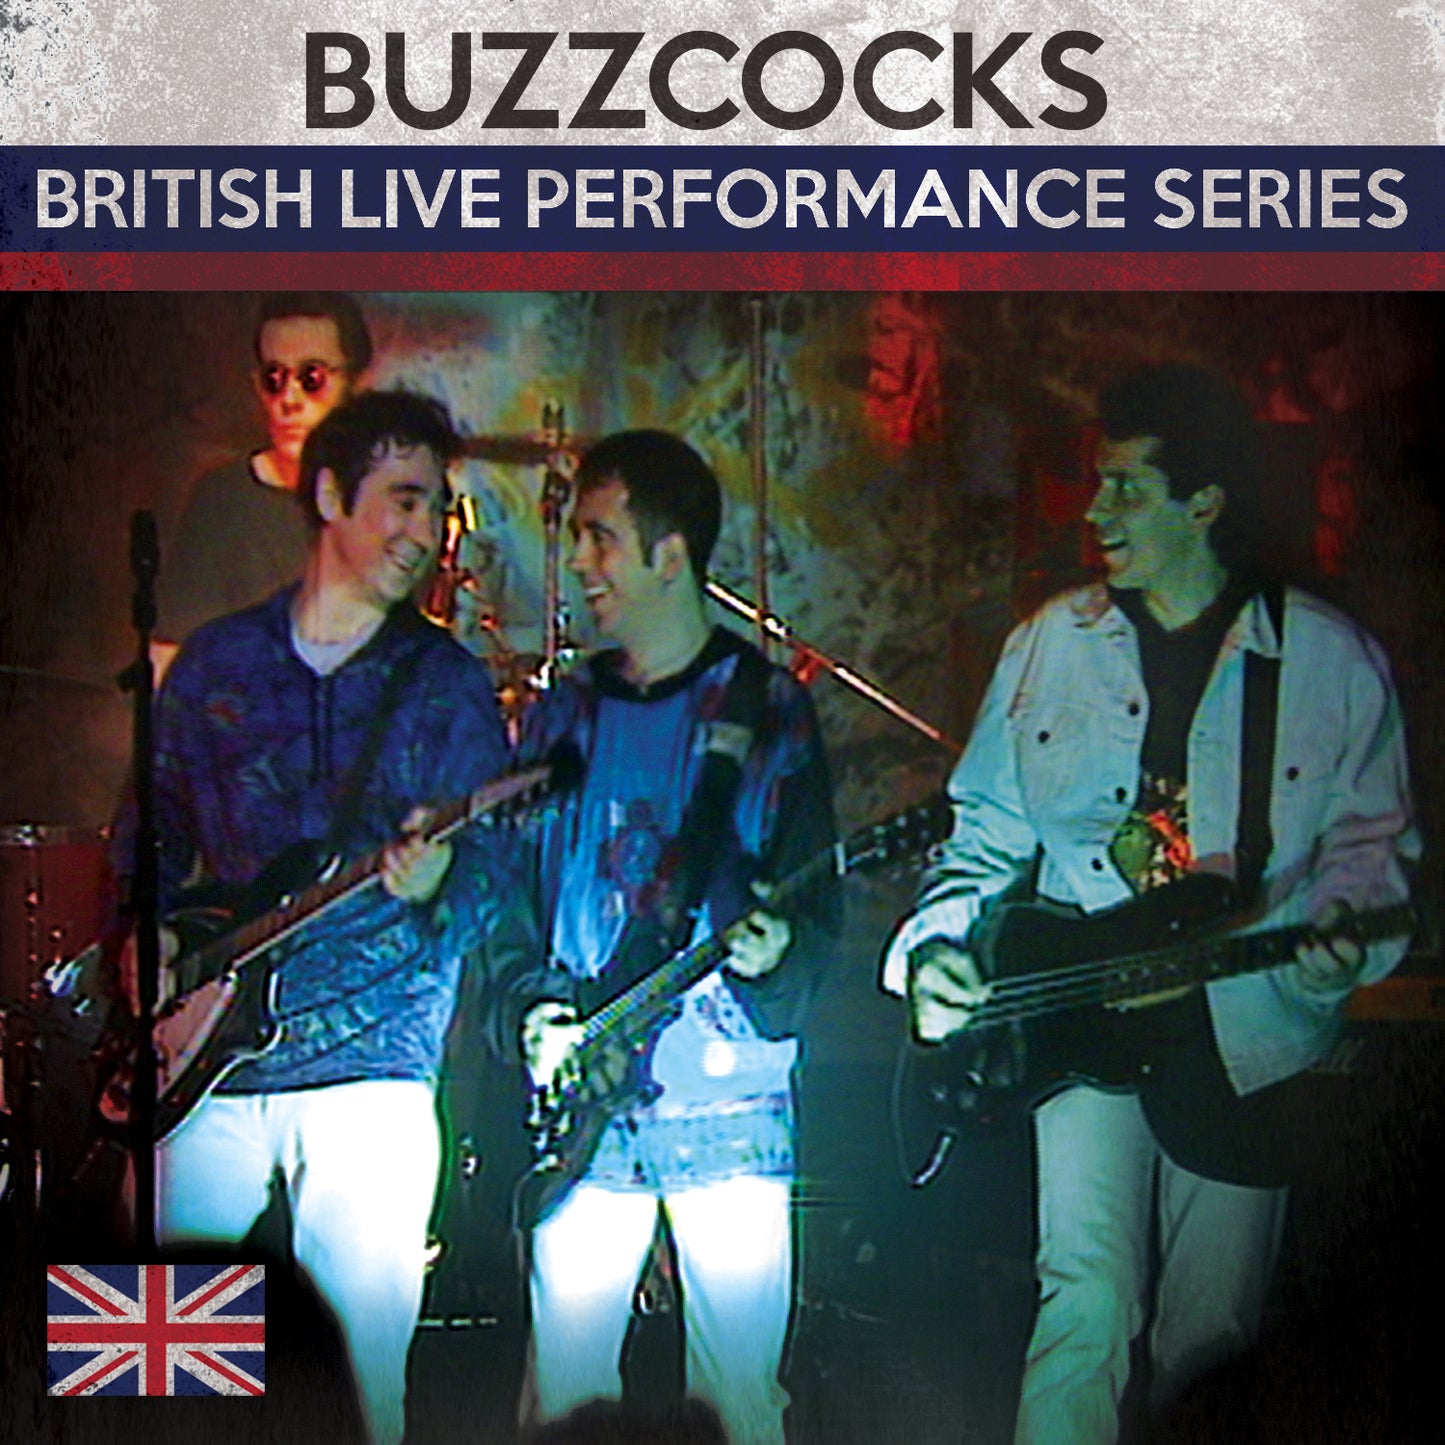 Buzzcocks (British Live Performance Series) (CD)